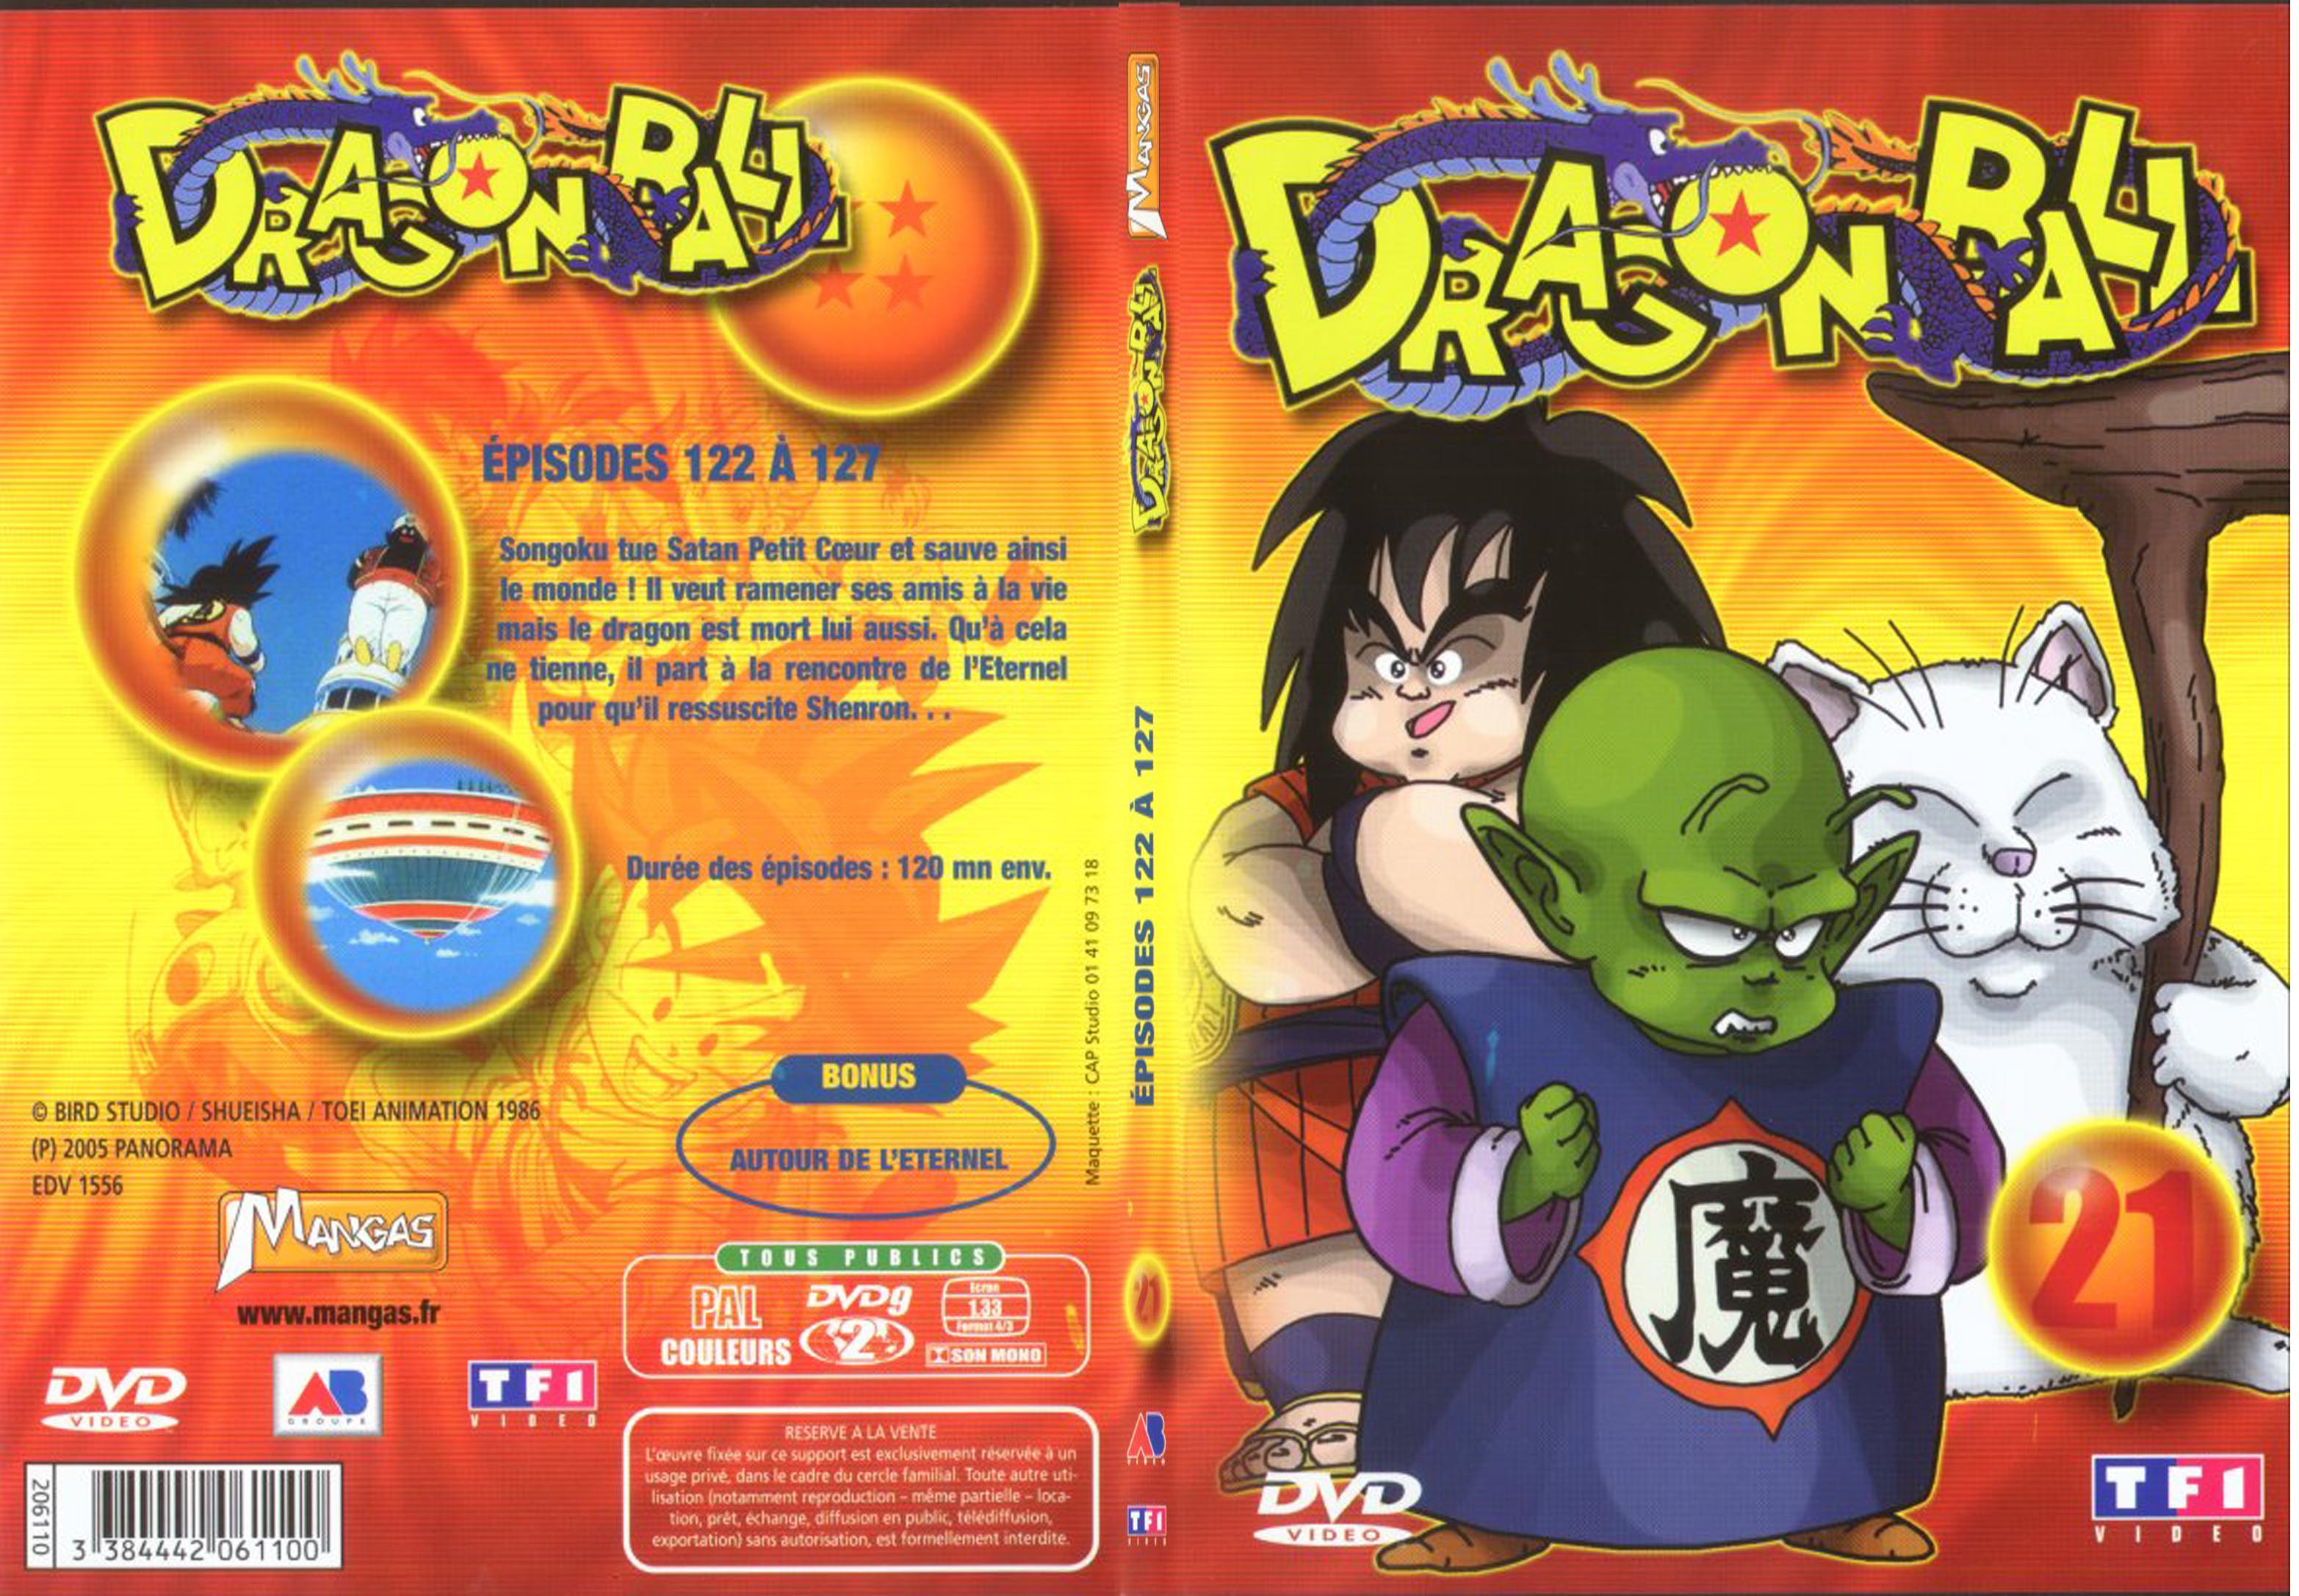 Jaquette DVD Dragon ball vol 21 - SLIM